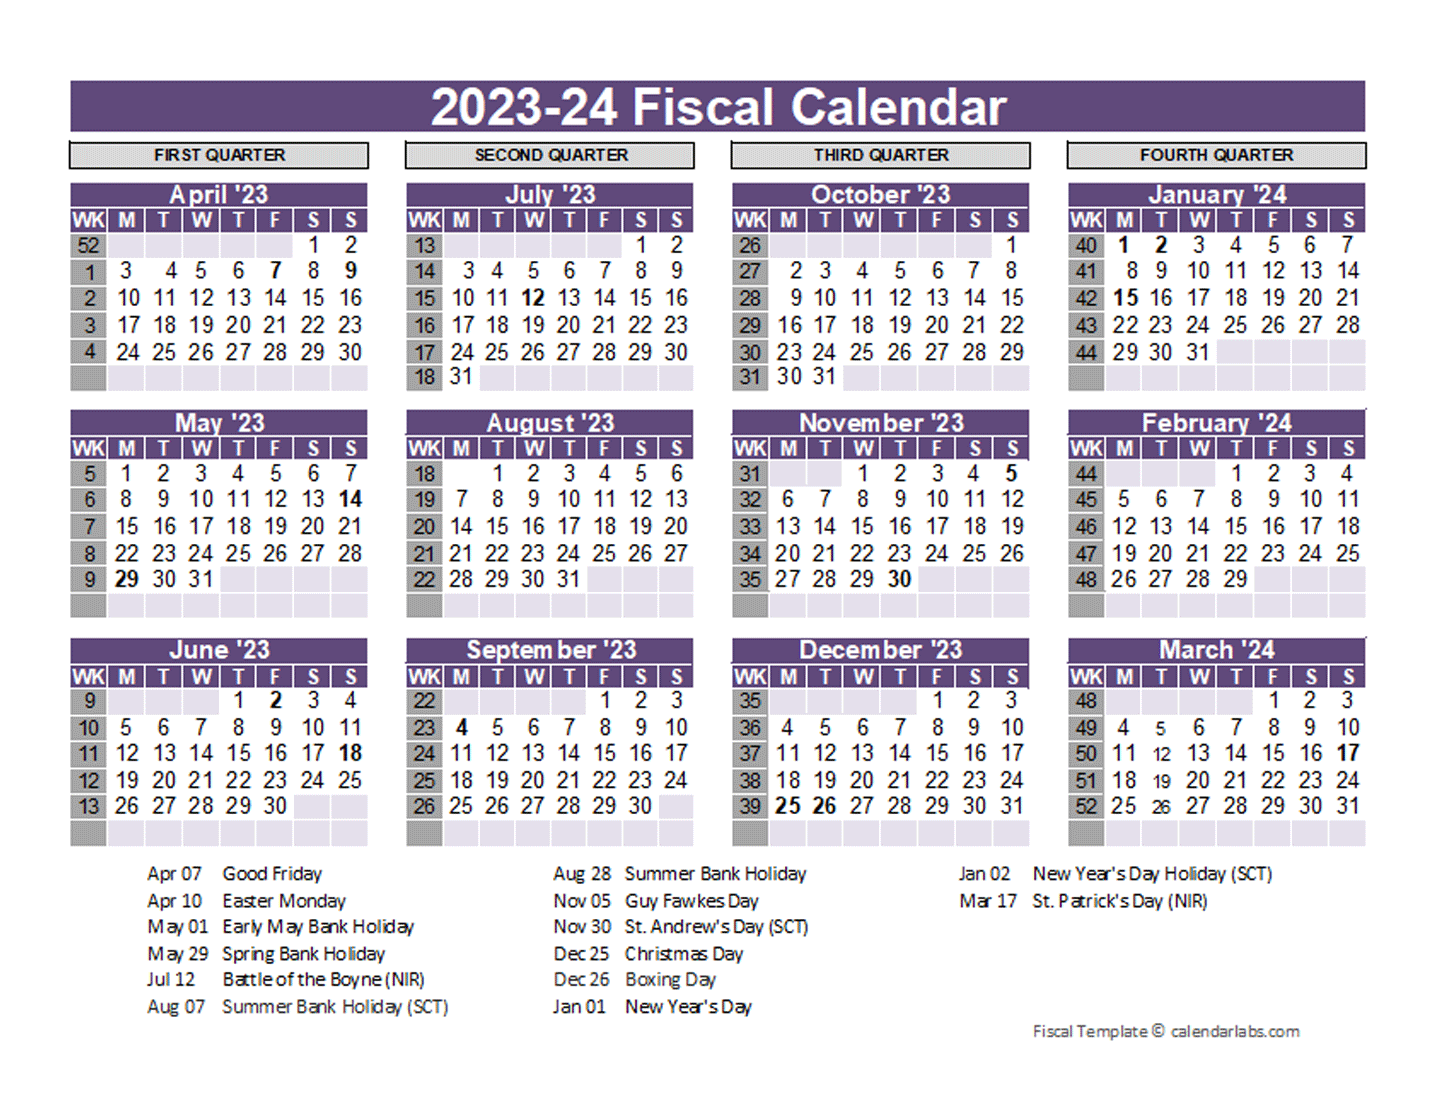 Uk Fiscal Calendar Template 2023-2024 - Free Printable Templates for Free Printable Calendar April 2023 To March 2024